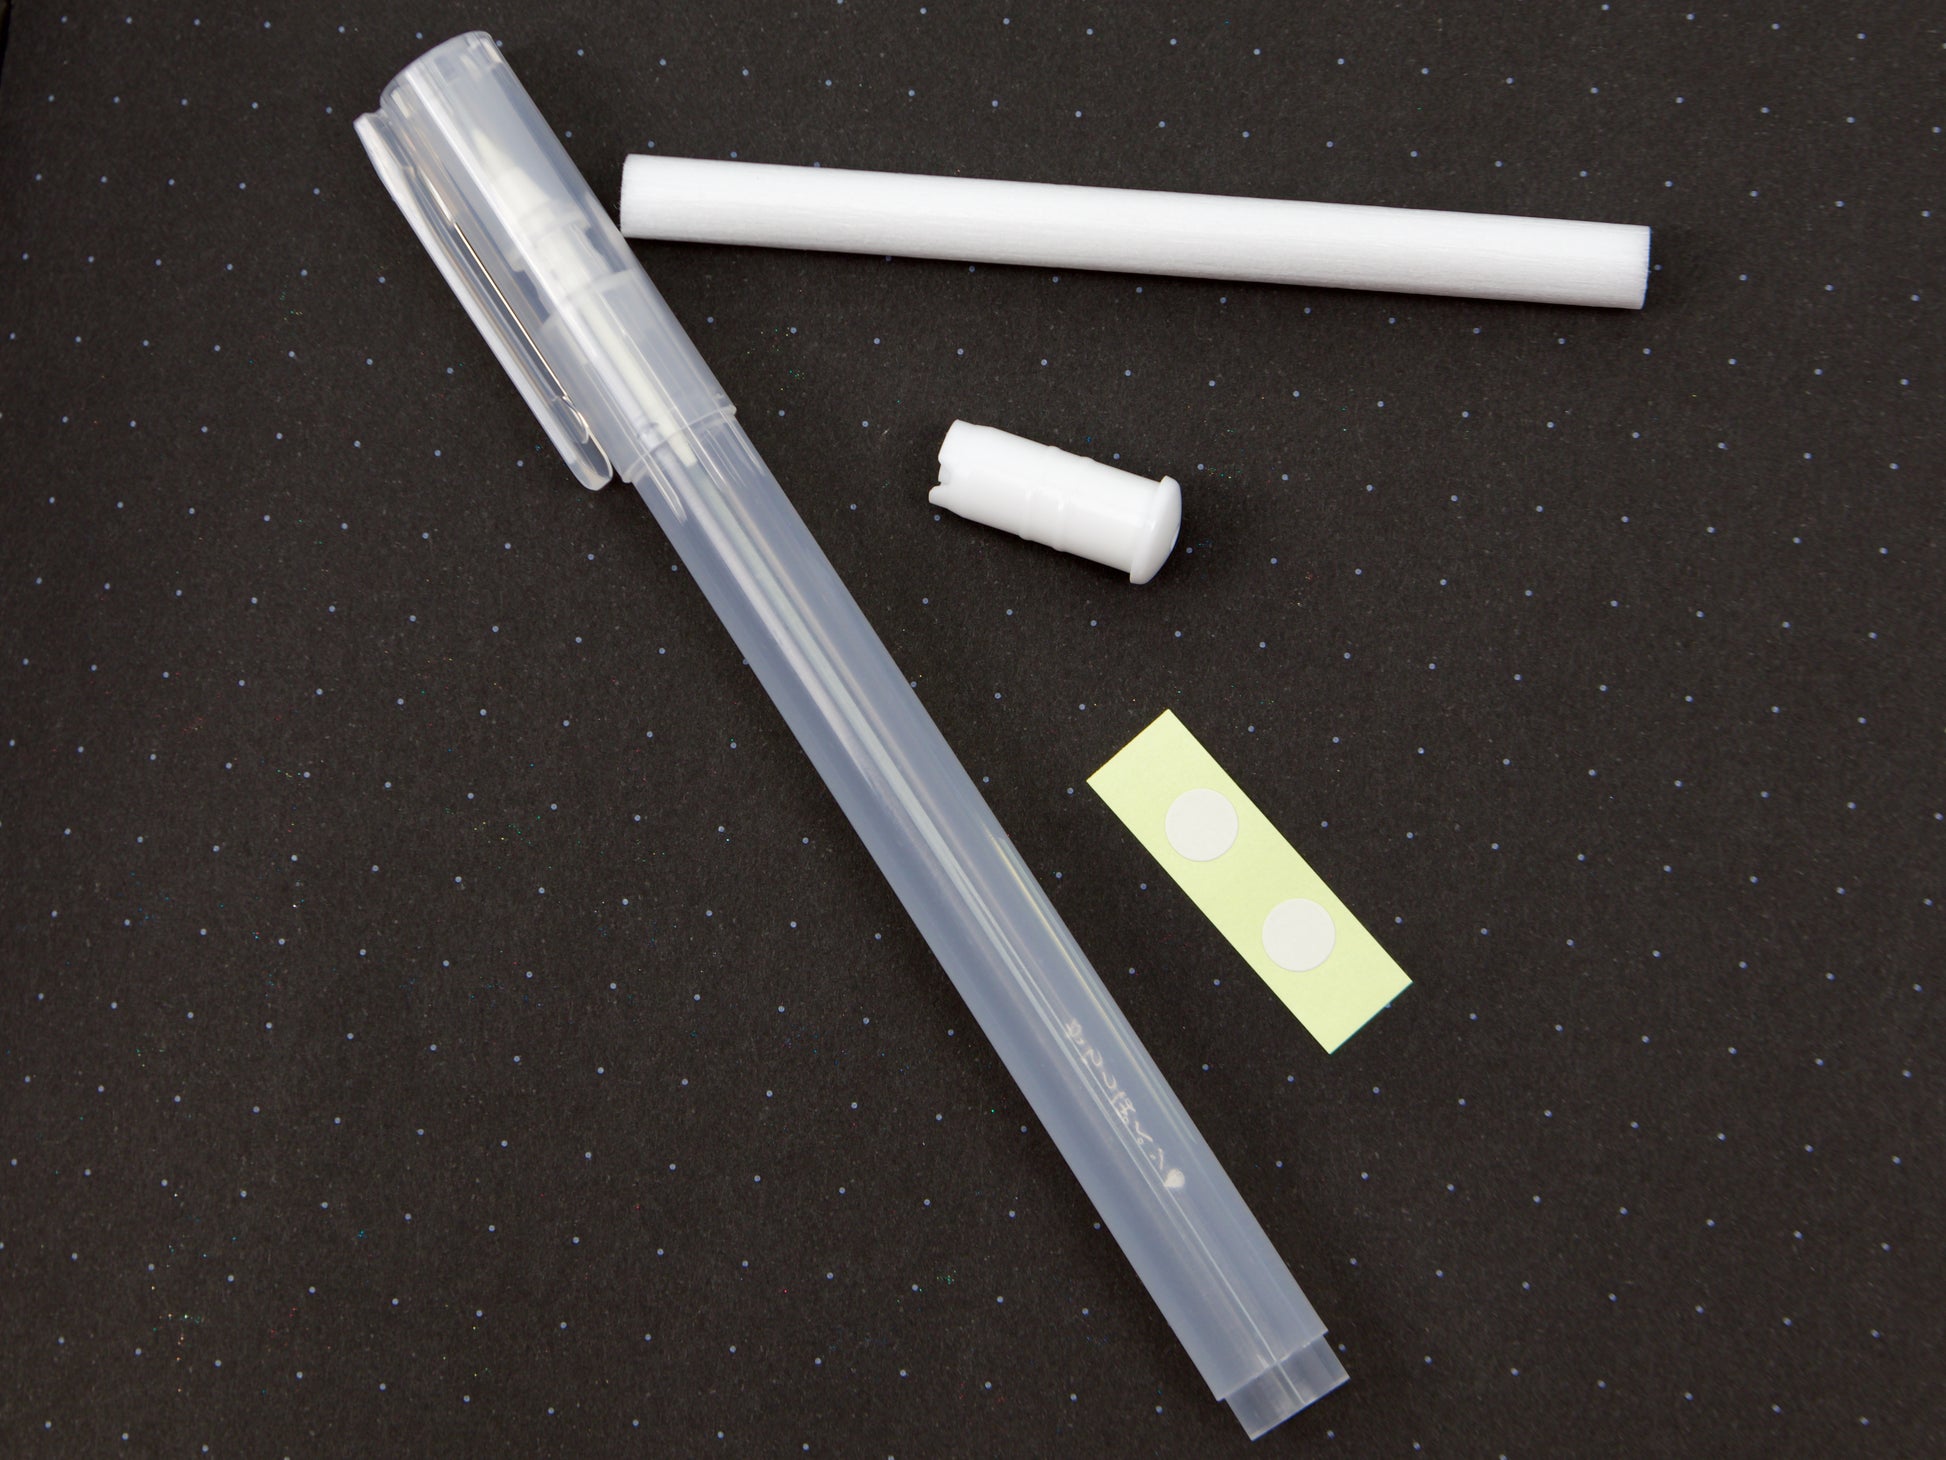 Kuretake Karappo Empty Pen- .4mm Fine Tip